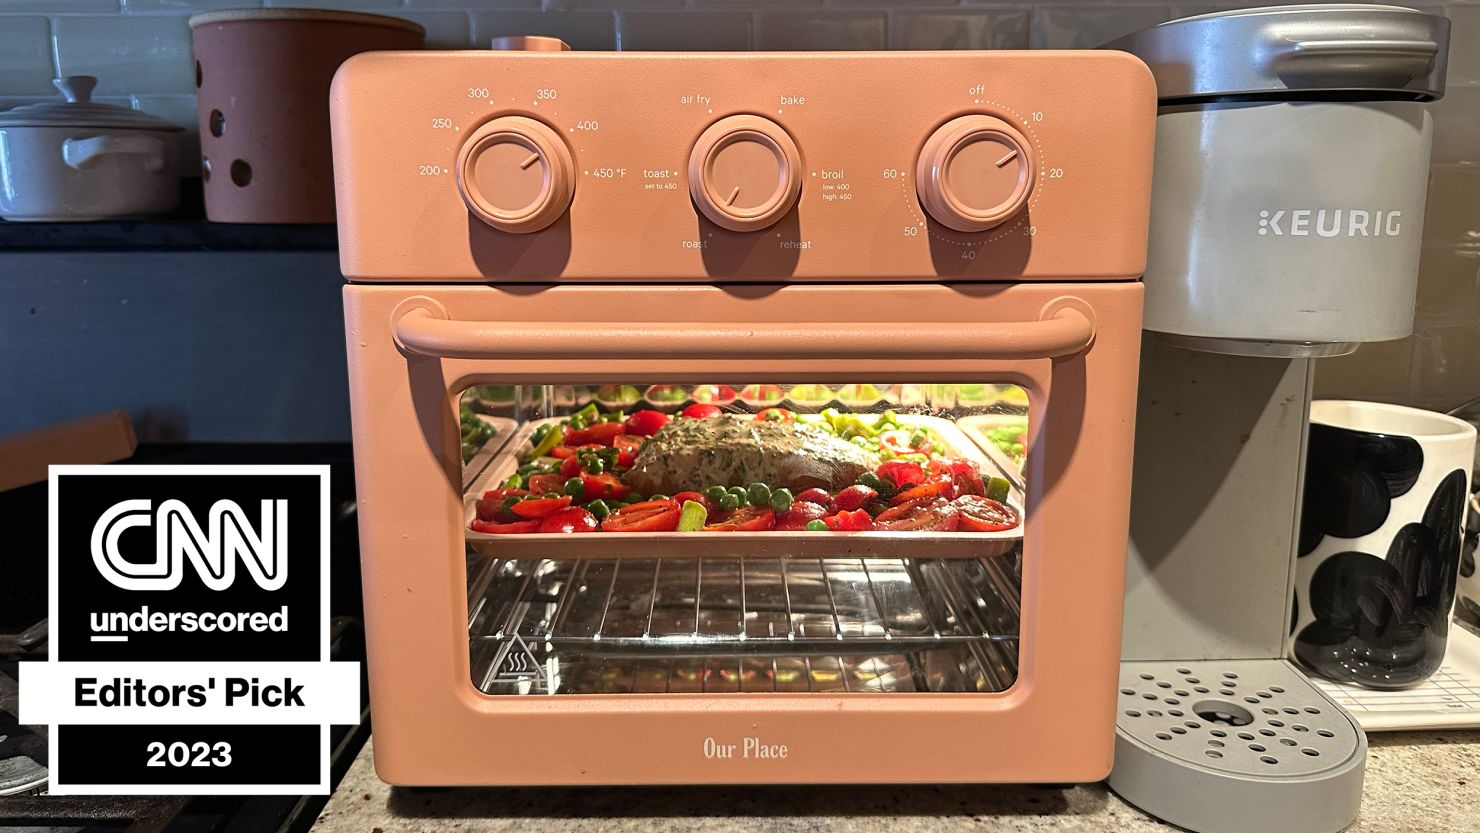 Dash Kitchen Appliances Go Viral For a Reason — Shop Our 20 Favorite Picks  in 2023